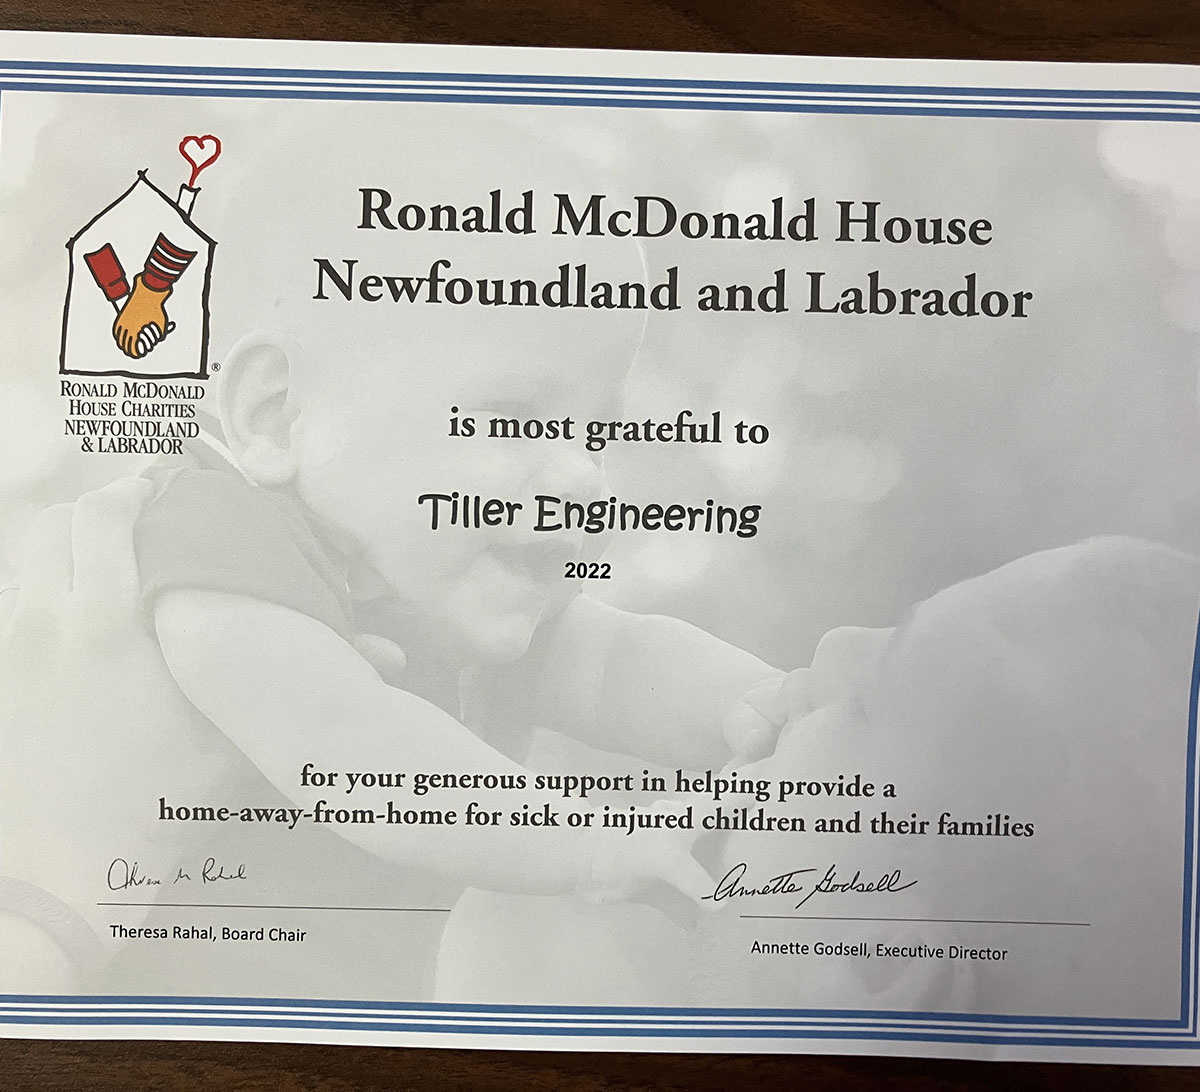 Tiller Engineering Supports Ronald McDonald House Charities NL